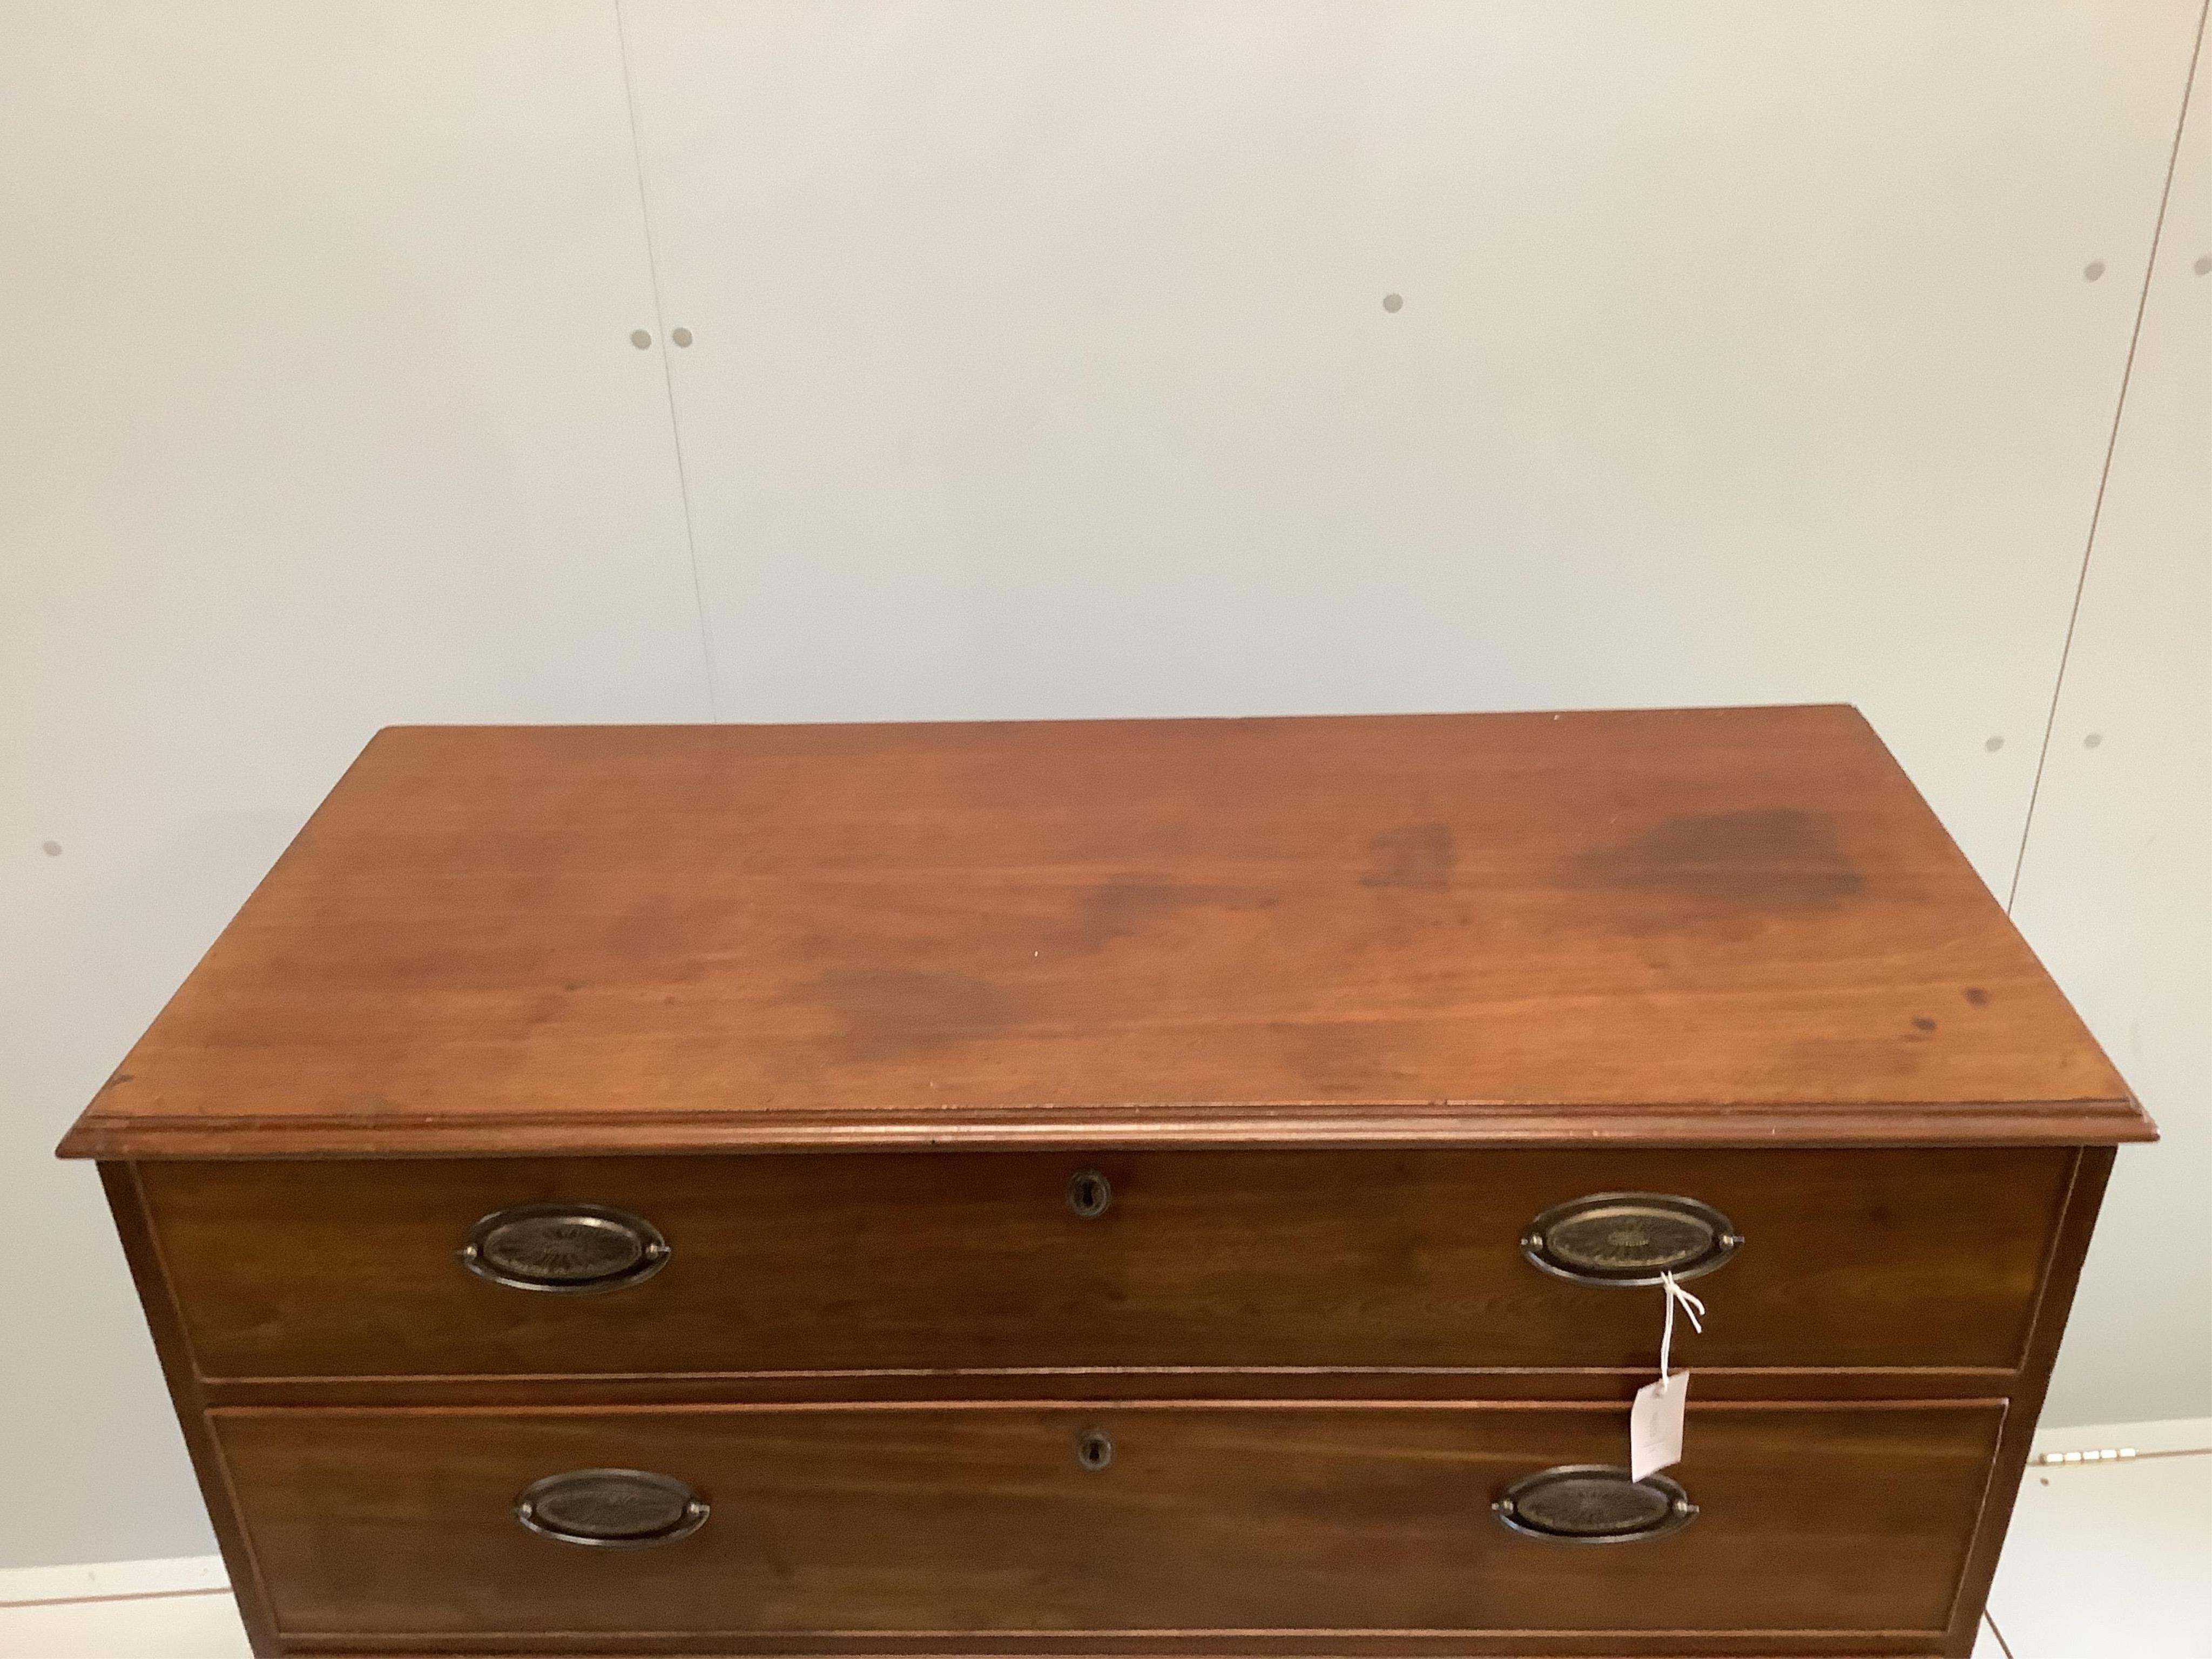 A George IV mahogany four drawer chest, width 114cm, depth 50cm, height 108cm. Condition - fair